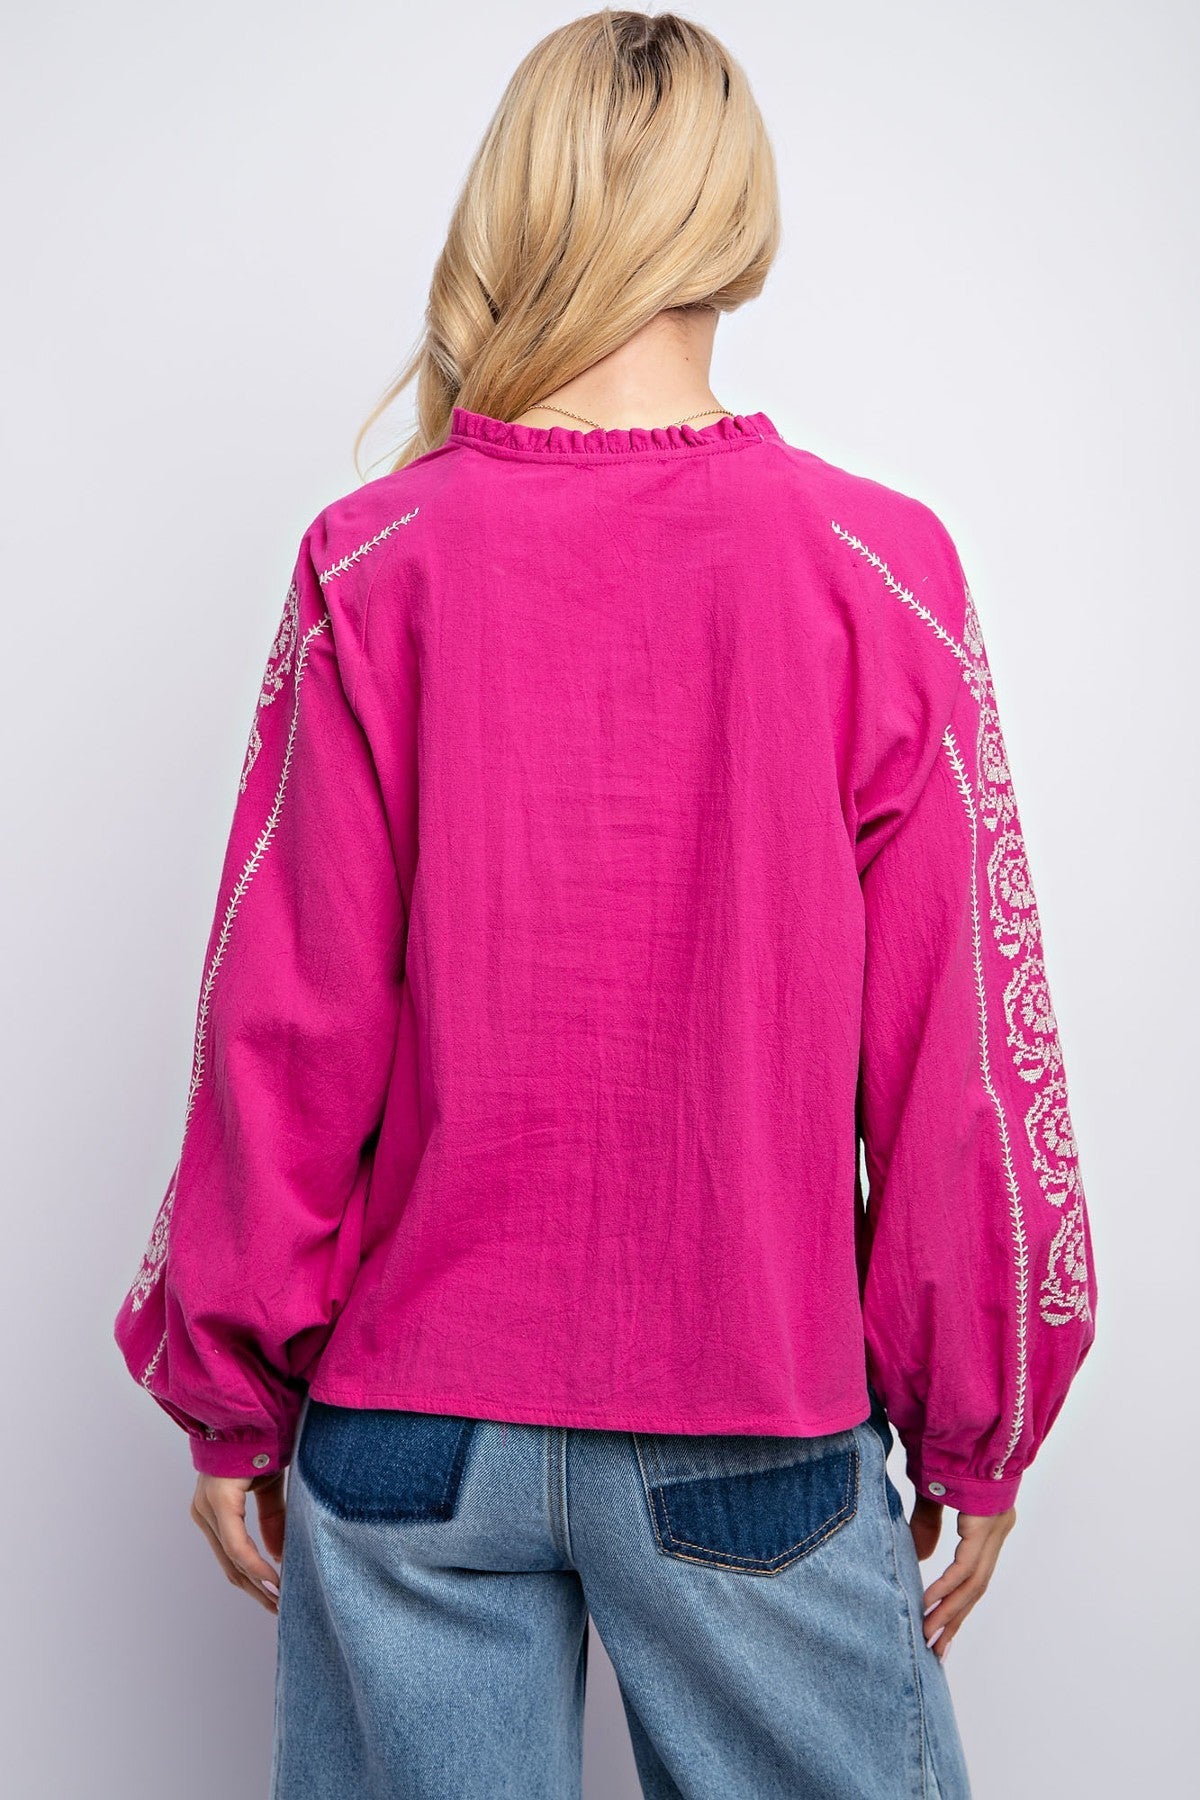 Linen Gauze Embroidered Top - Tigbuls Variety Fashion